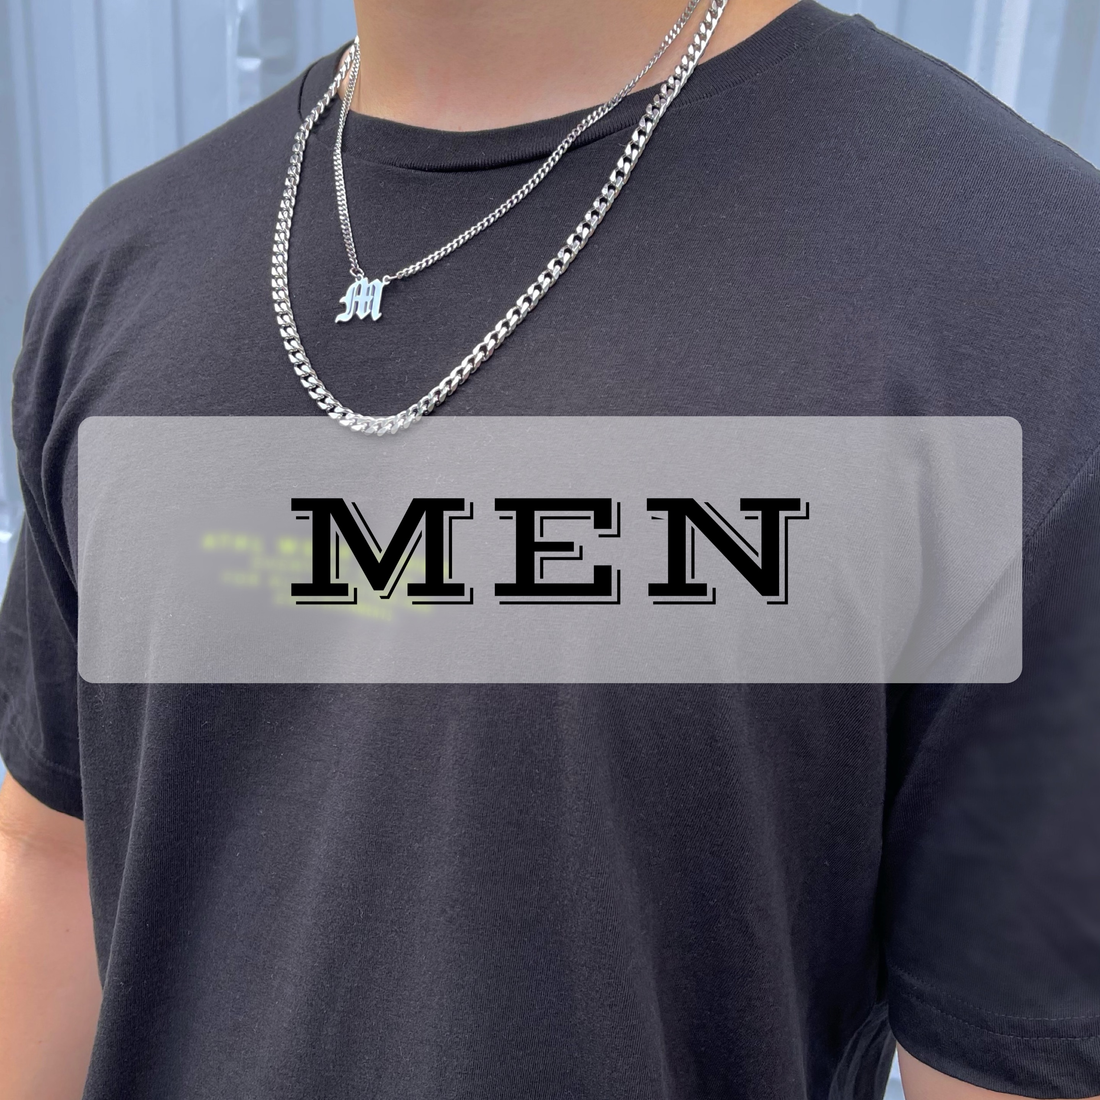  Men